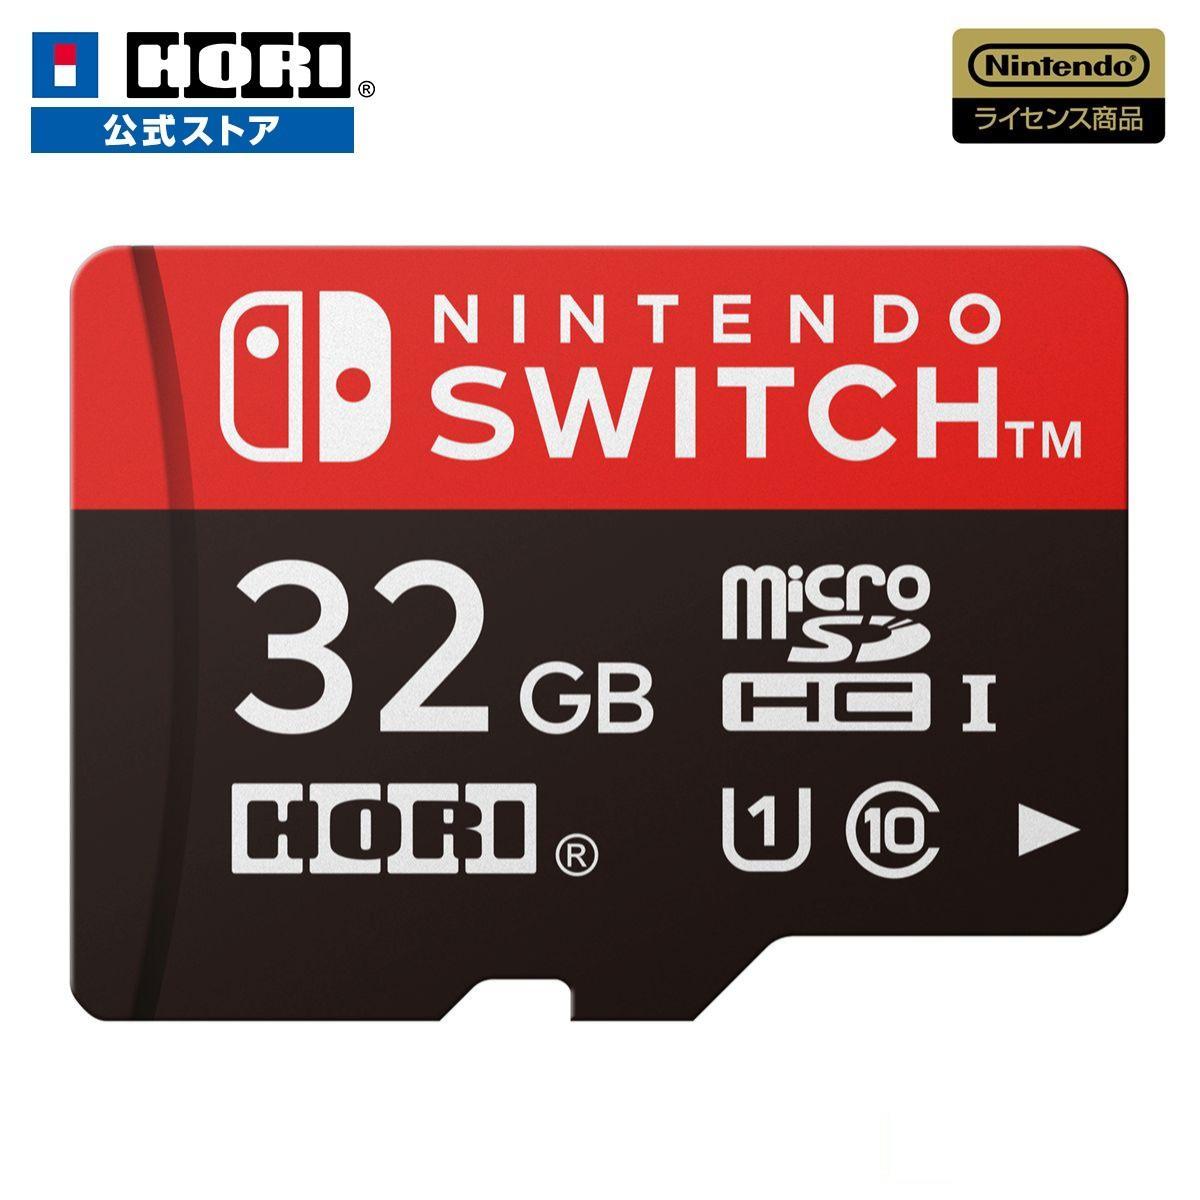 microSDカード for Nintendo Switch 32GB NSW-043 任天堂 SDカード HORI ホリ ゲーム ストレージ ダウンロード